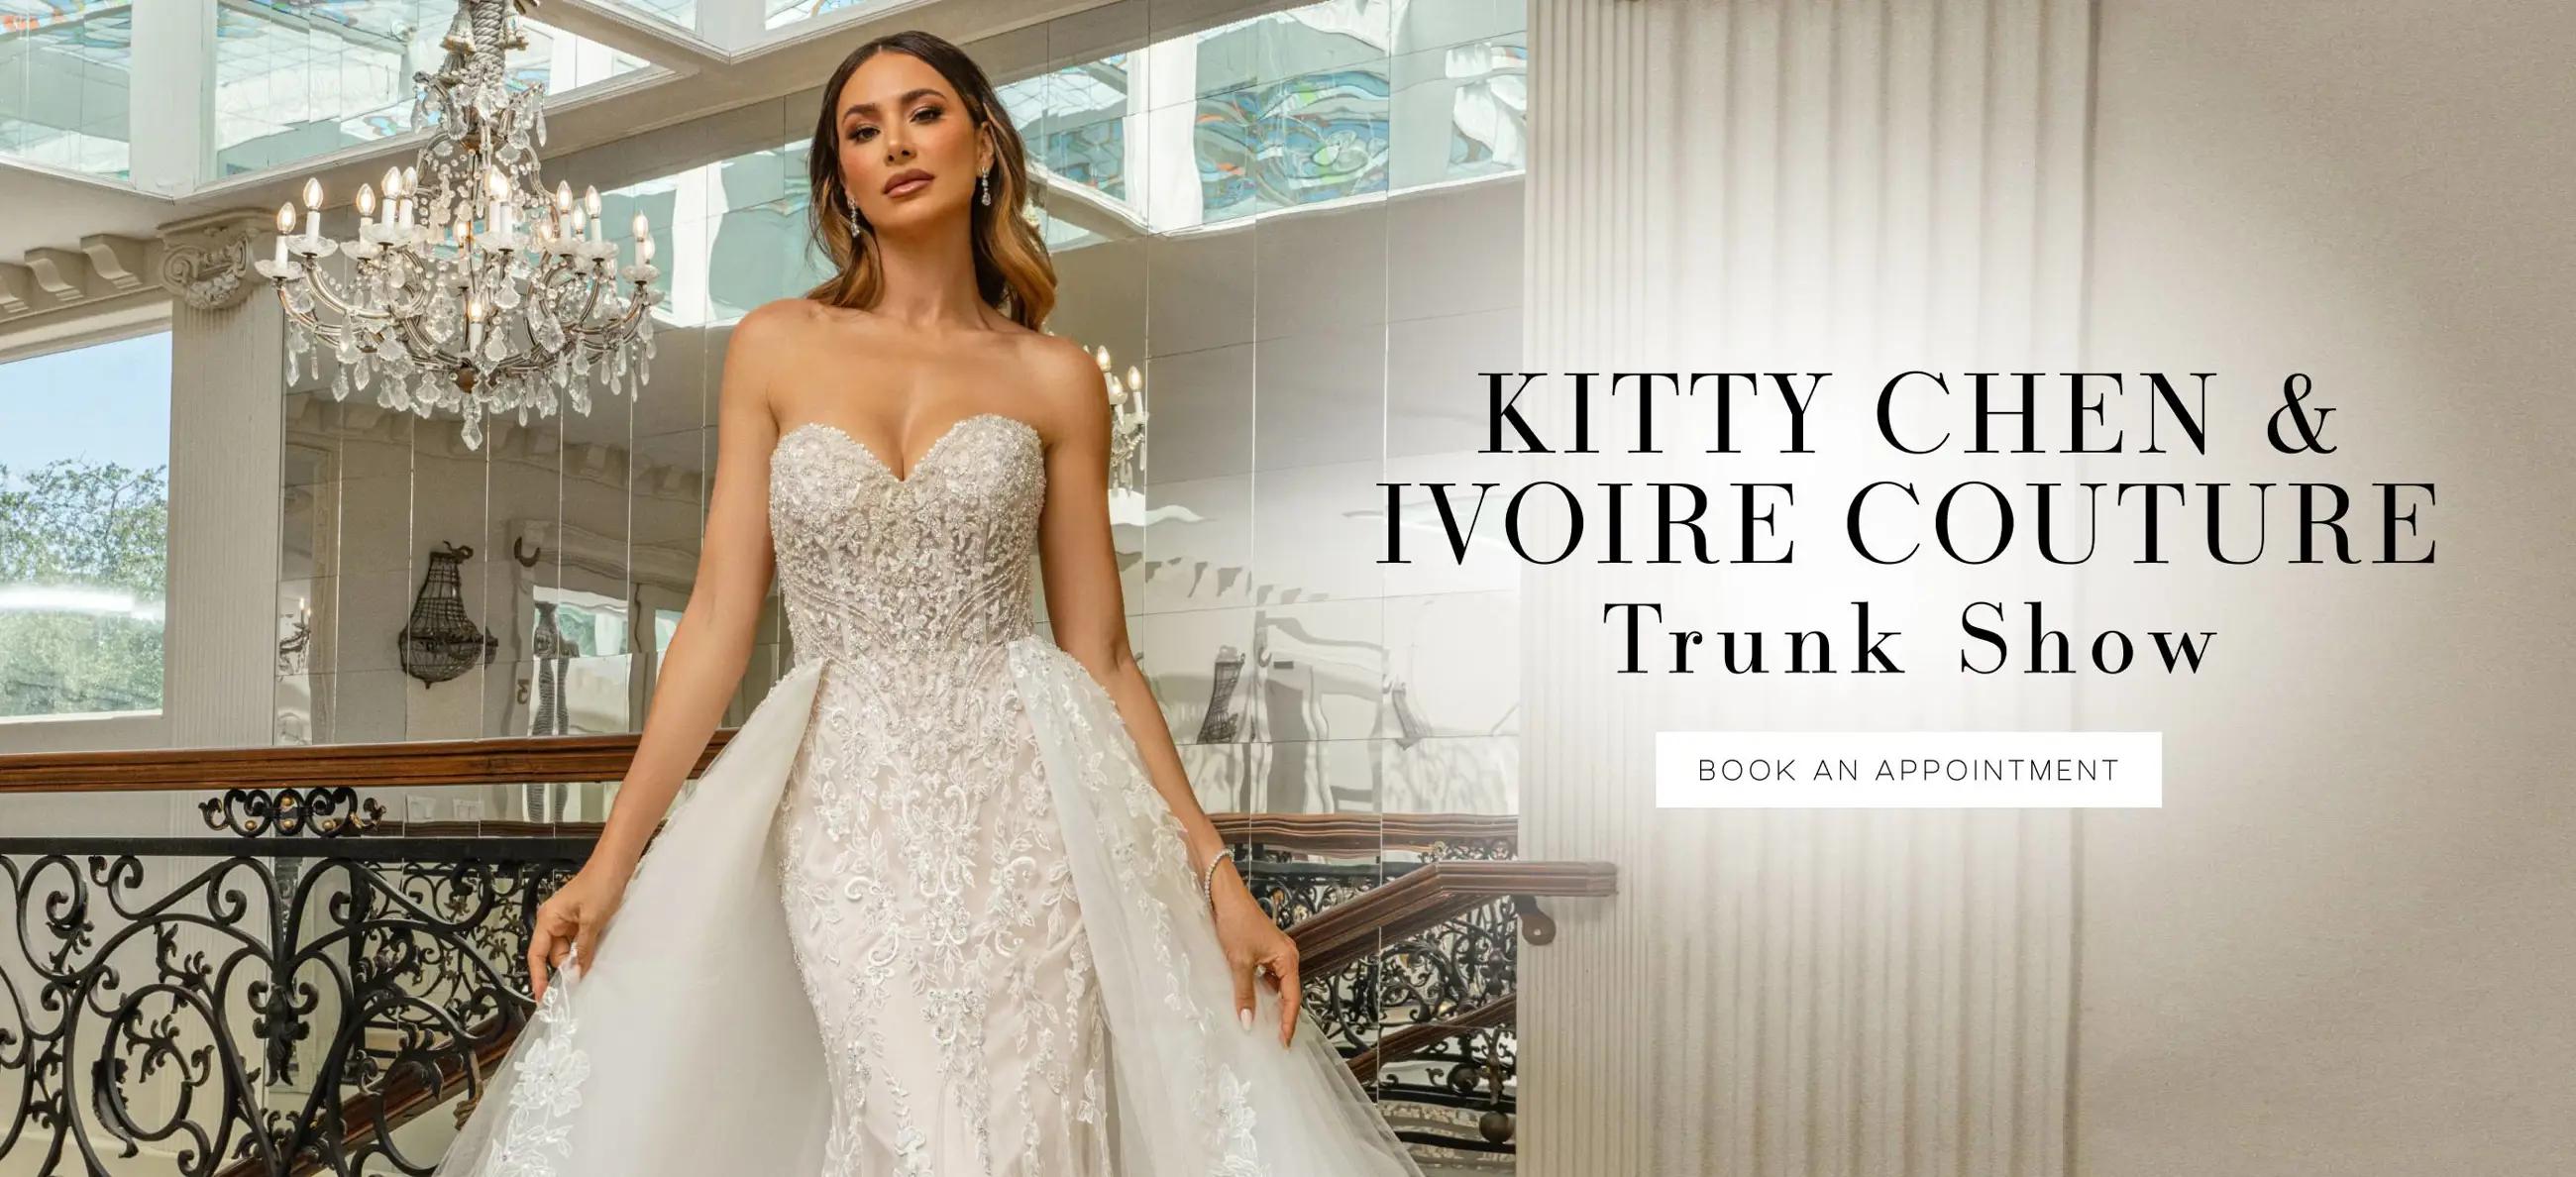 Kitty Chen & Ivoire Couture Trunk Show banner desktop